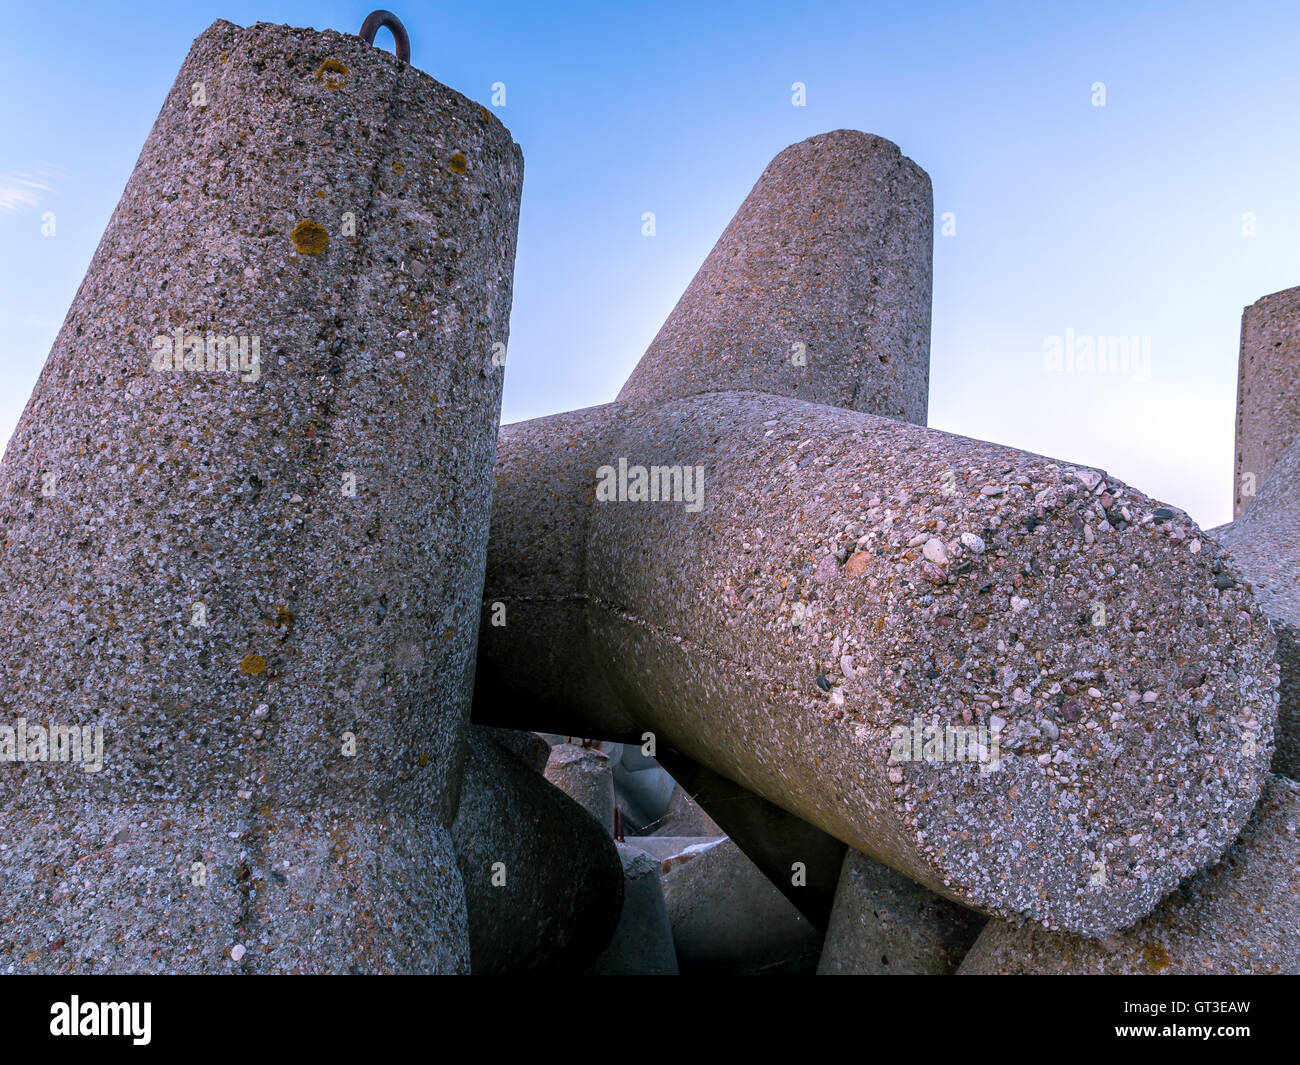 Massive concrete breakers stacked on the coastline Stock Photo